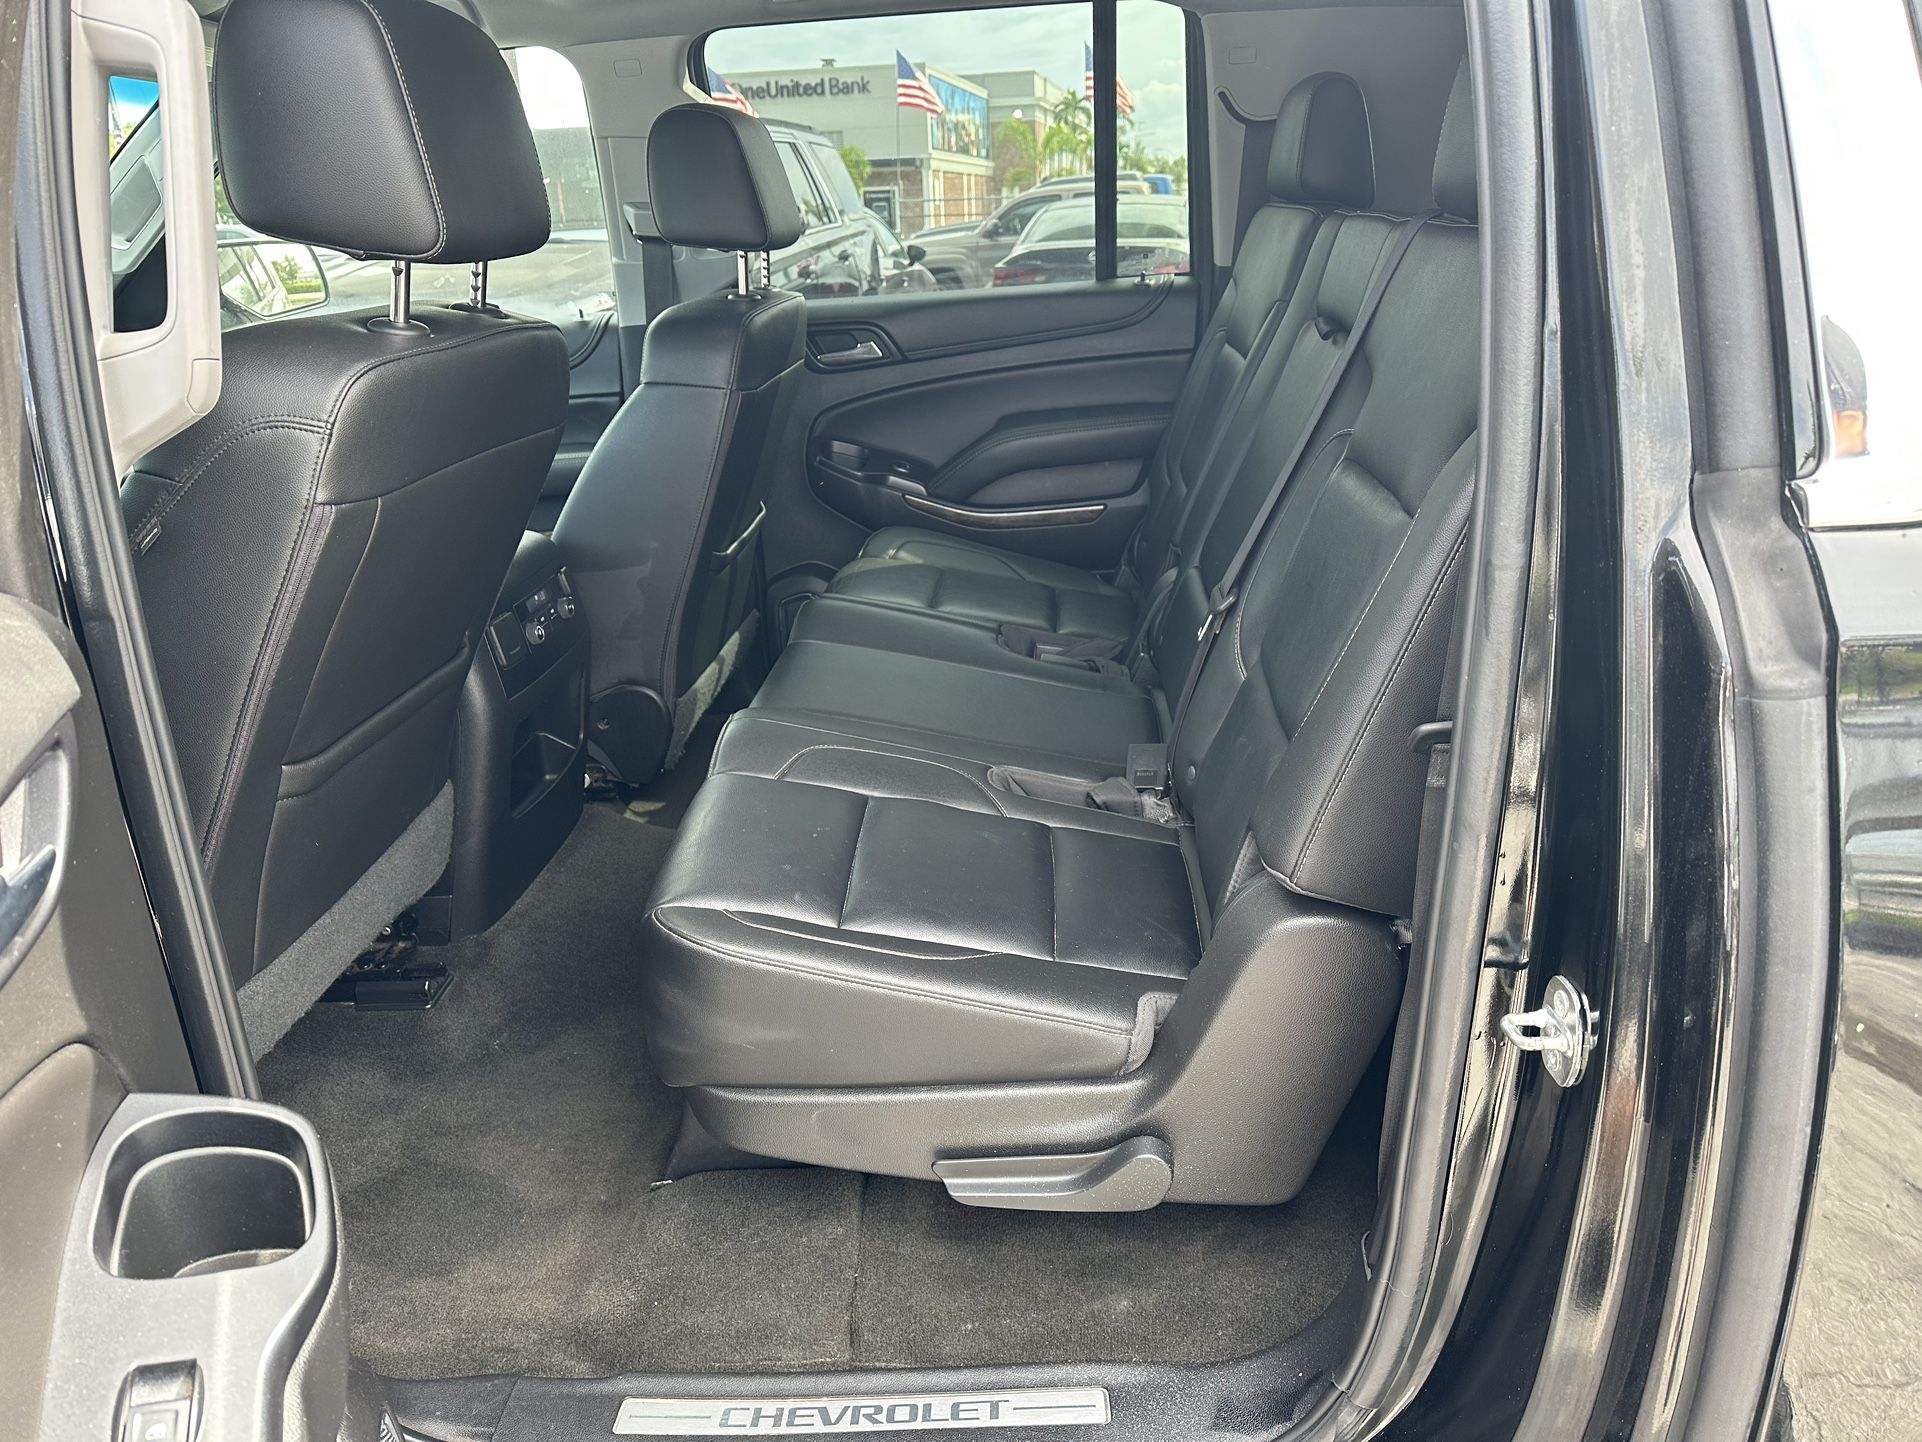 used 2018 Chevy Suburban Black - interior view 2